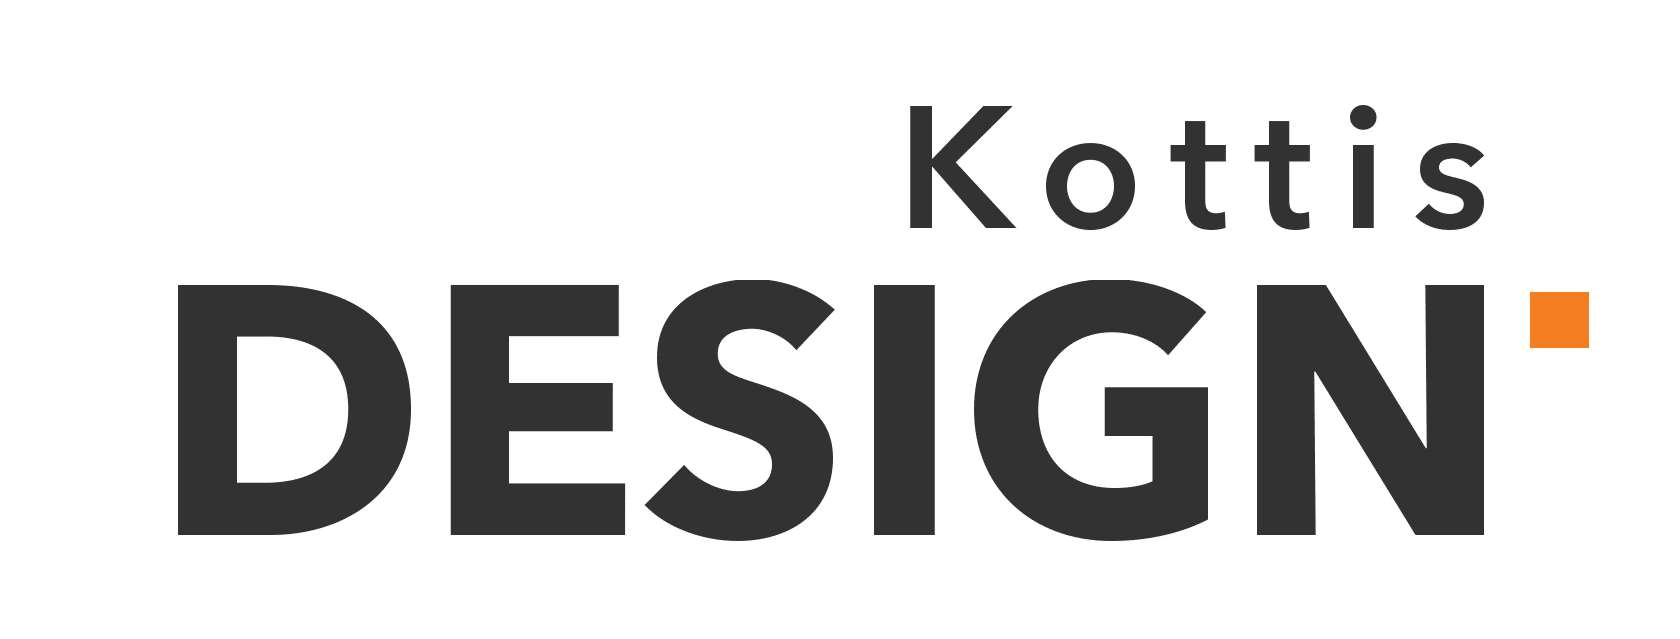 Kottis Design